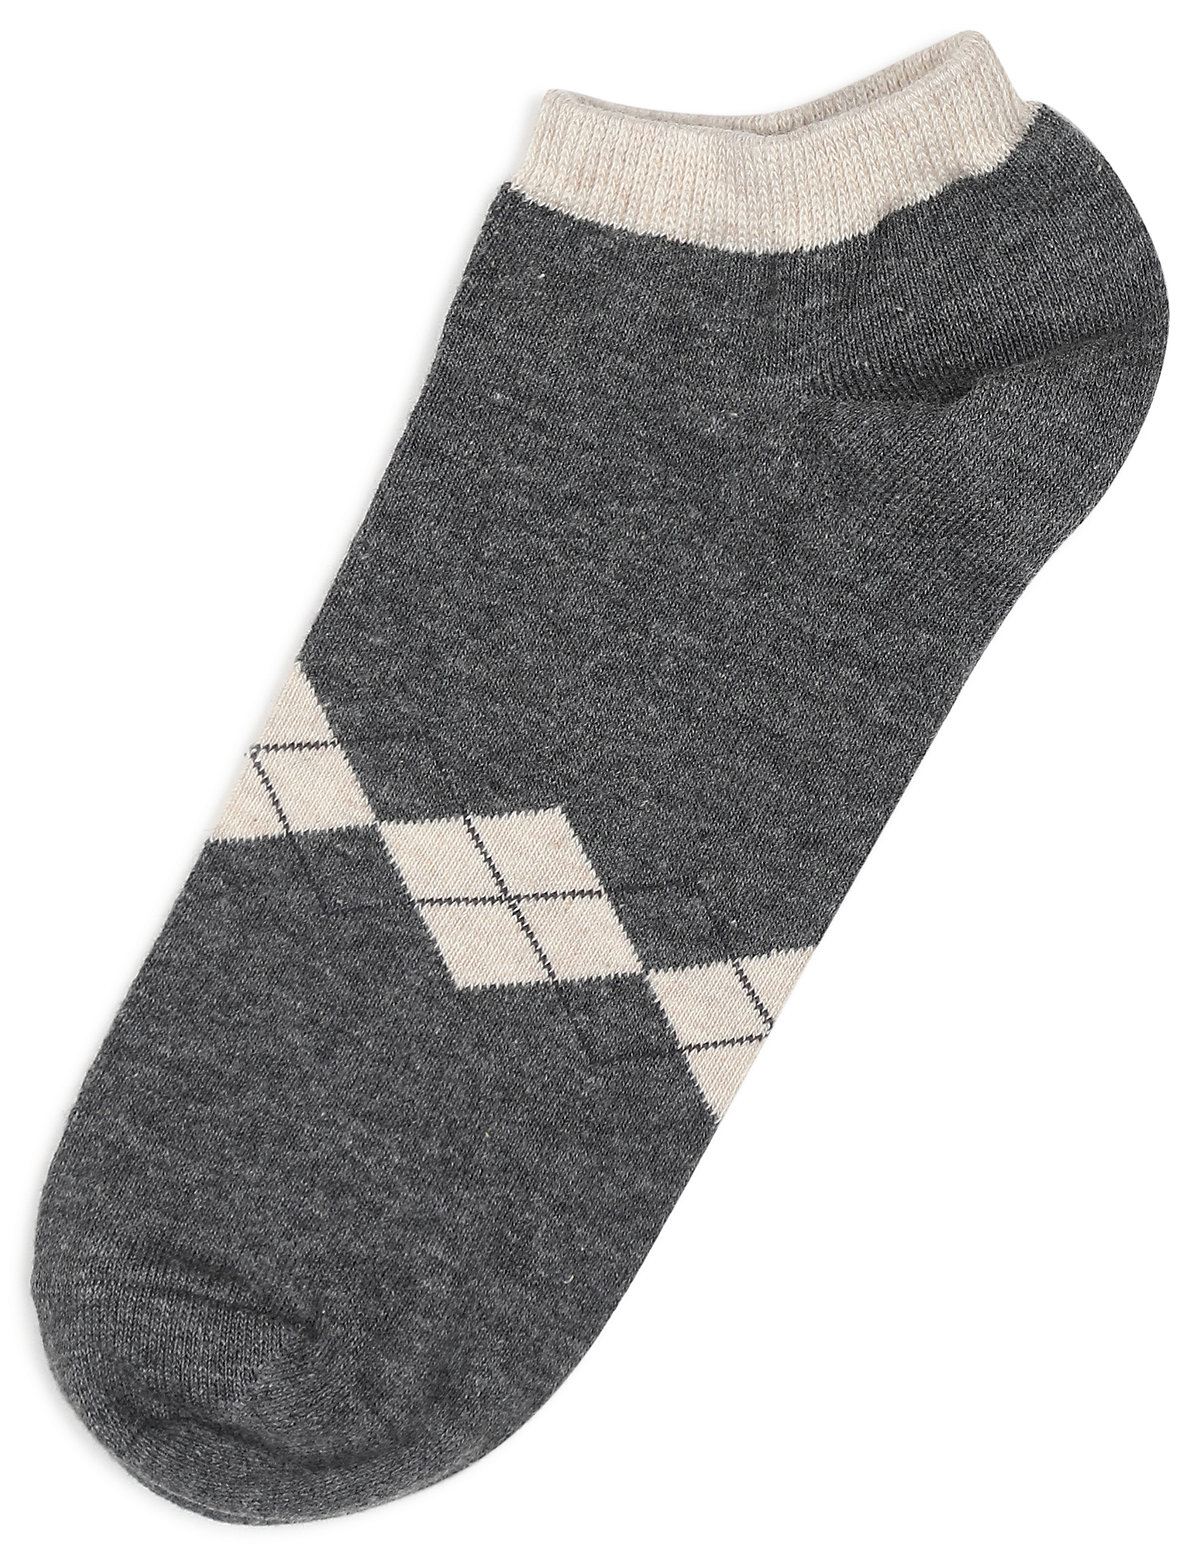 3 Pair of Cotton Mix Argyle Print Socks